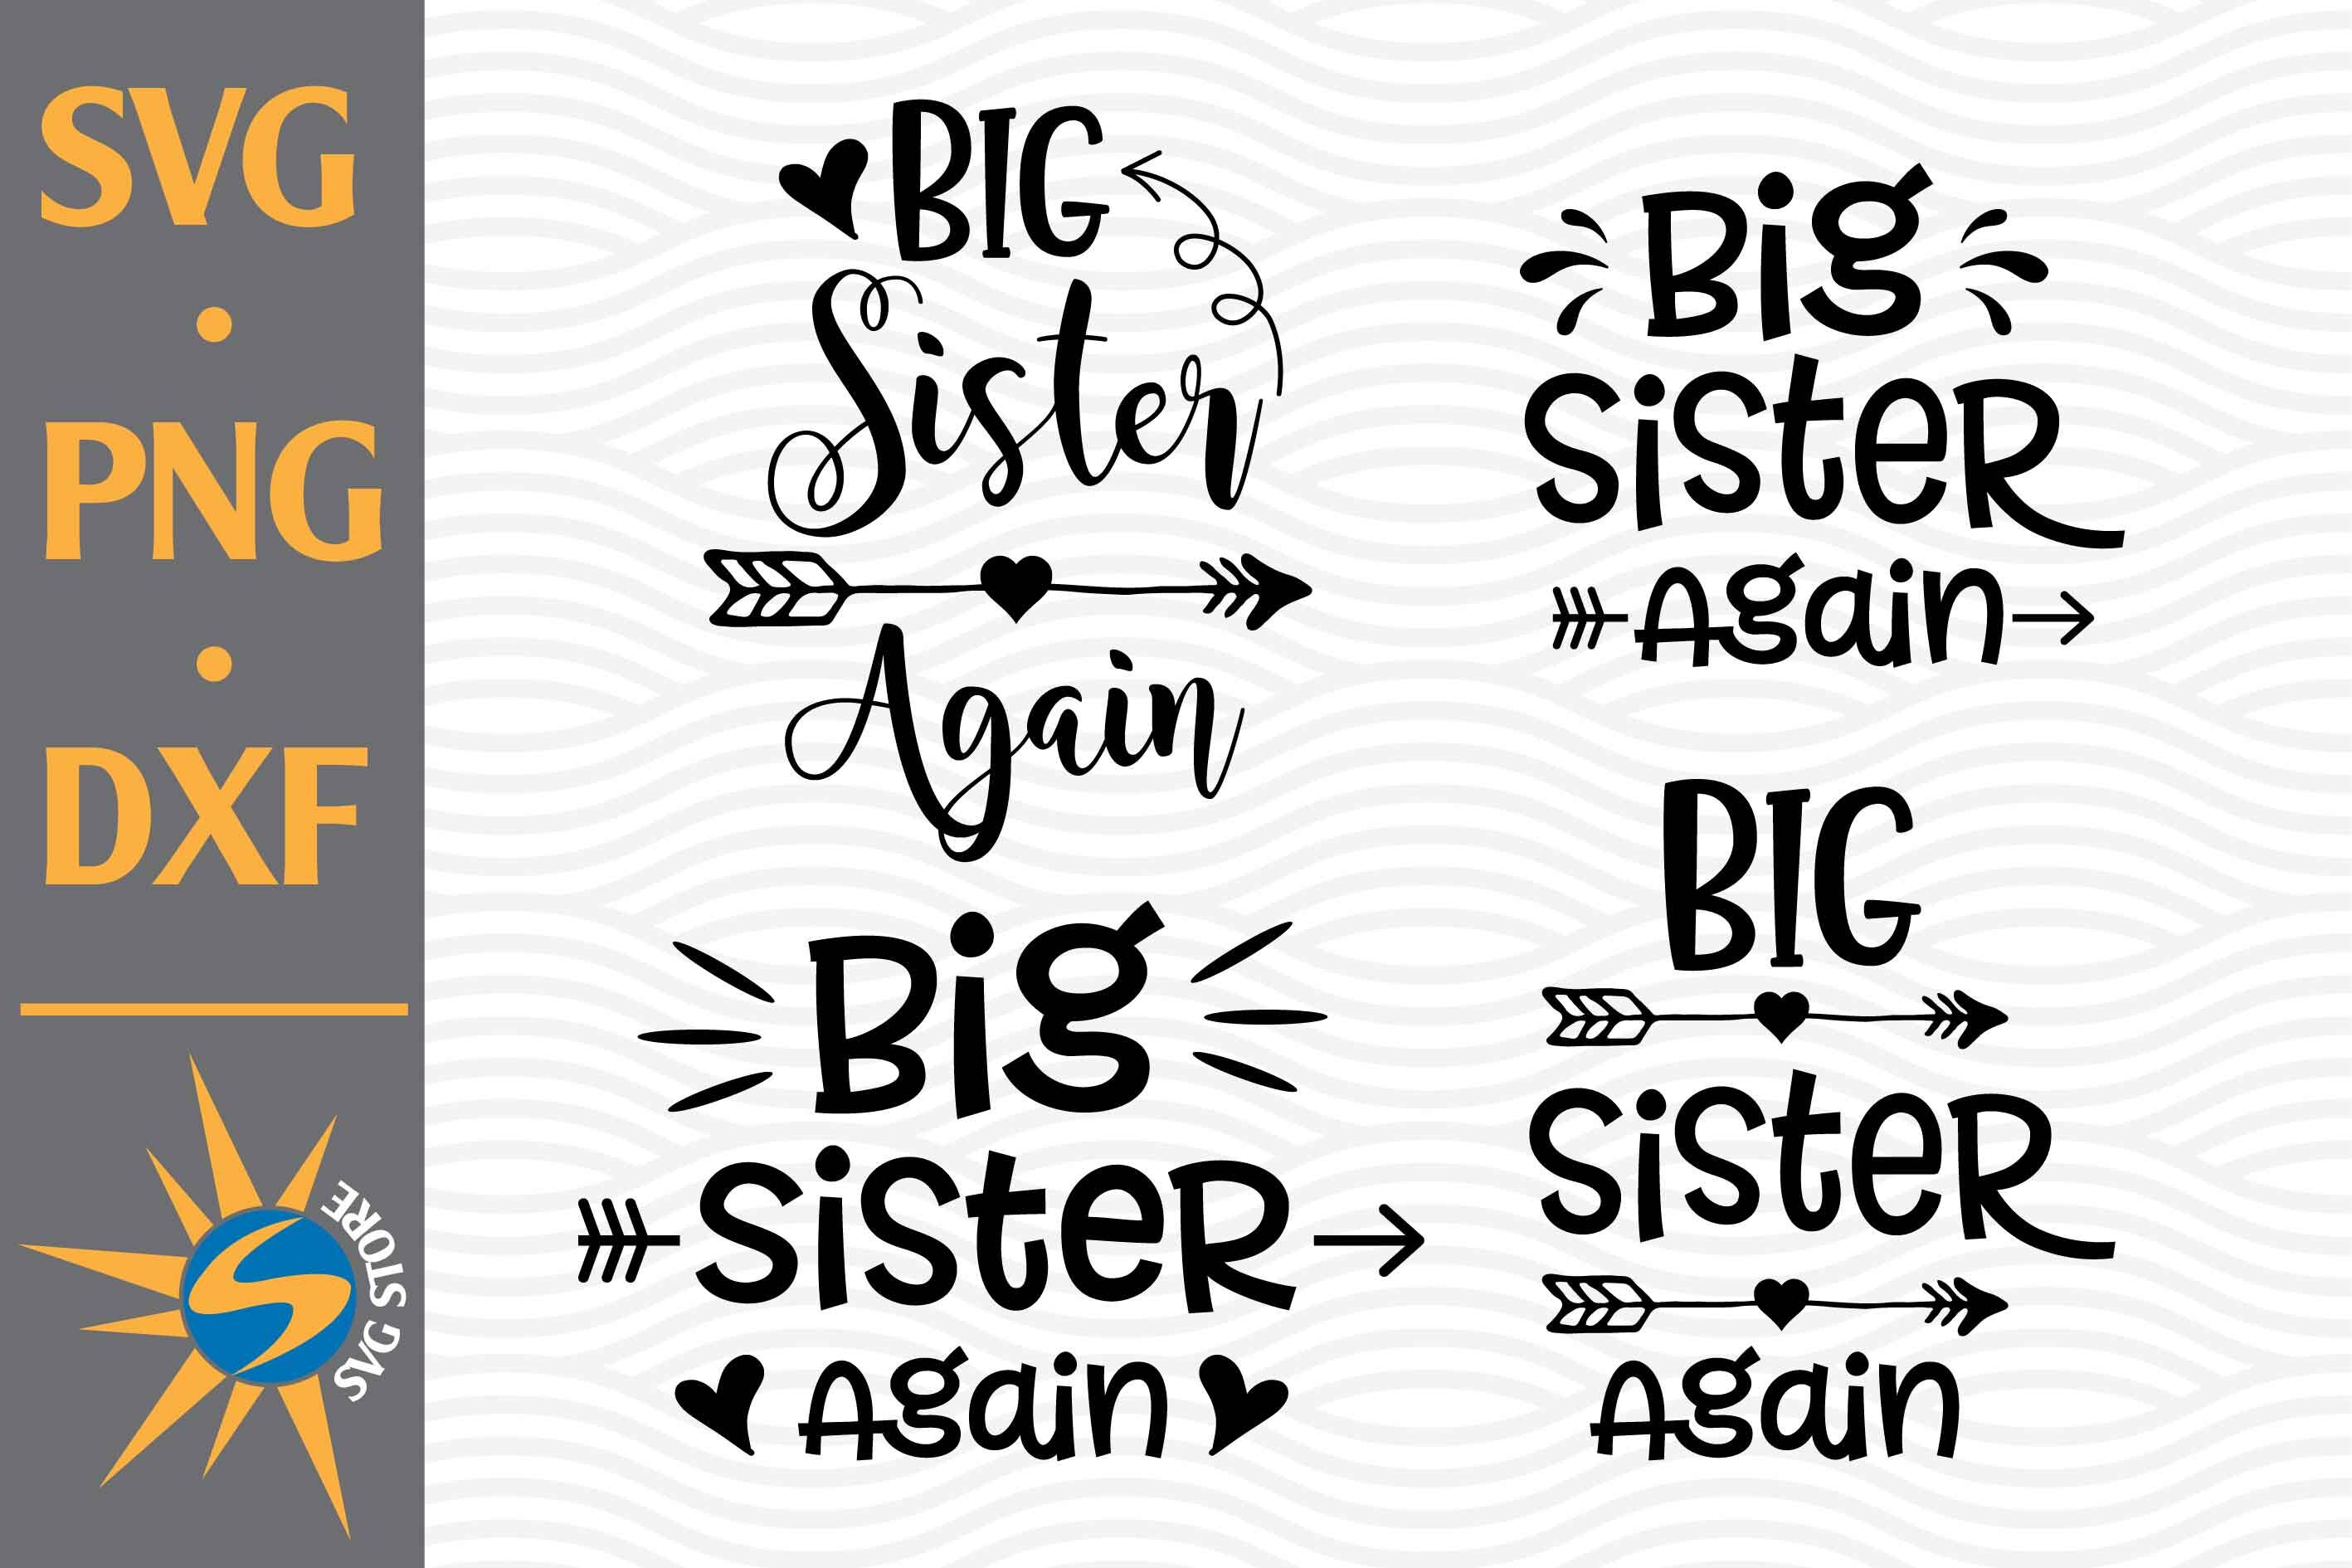 Big Sister SVG cut file png Hand Drawn Hand Lettered svg New Big Sis Promoted to Big Sister clip art dxf Big Sister Heart SVG